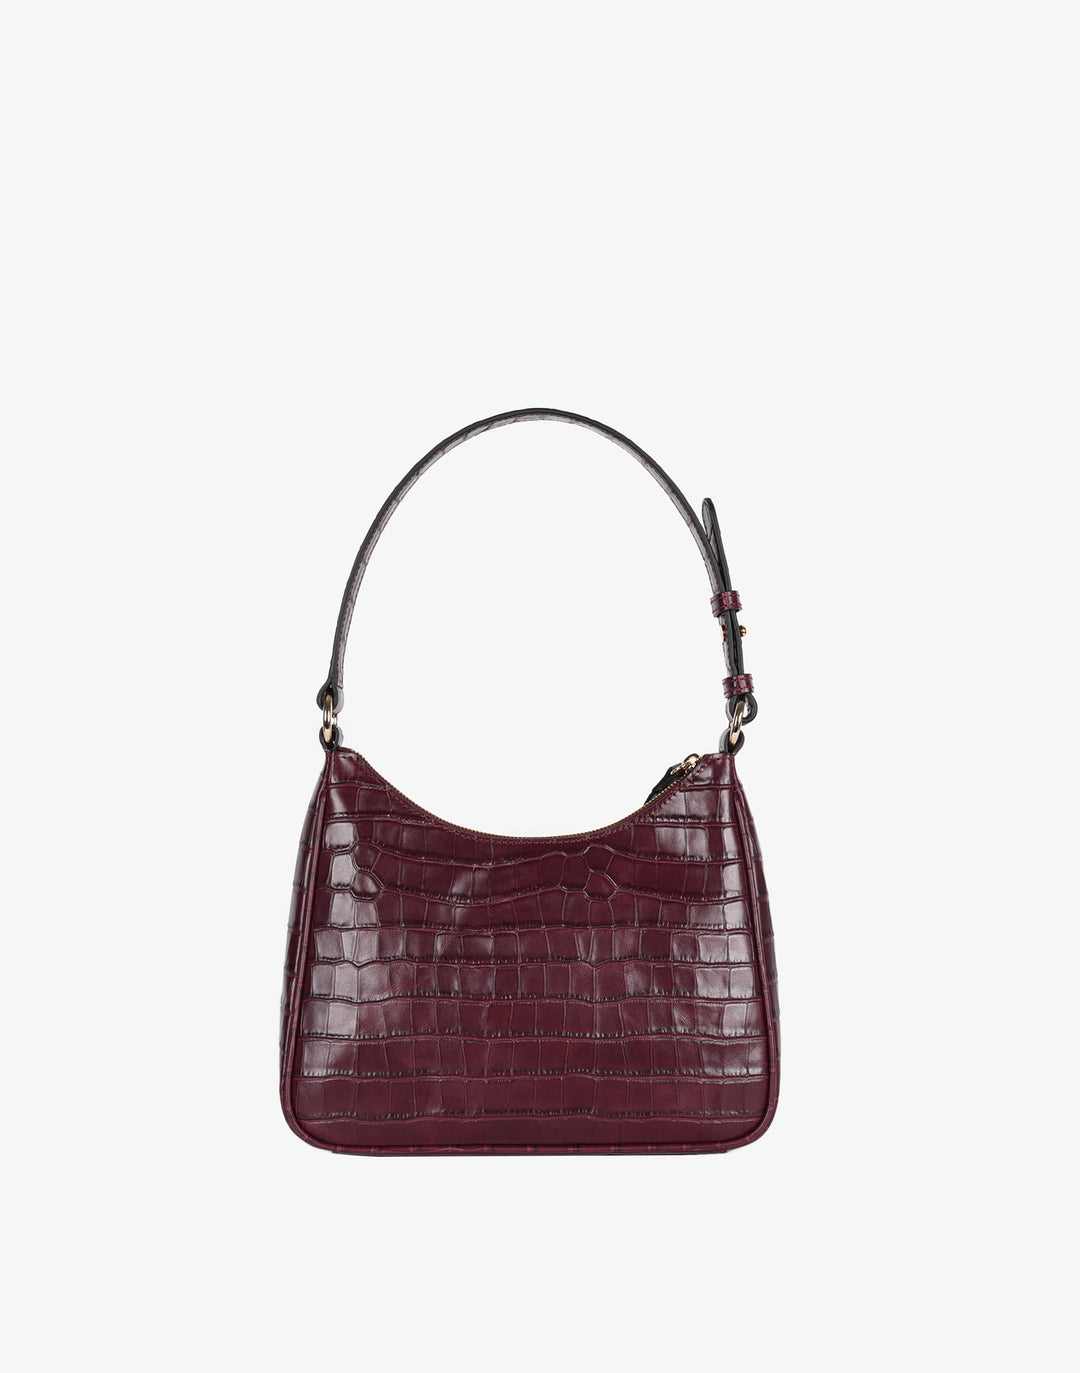  Burgundy Croc-Embossed Italian Leather Tote Handbag